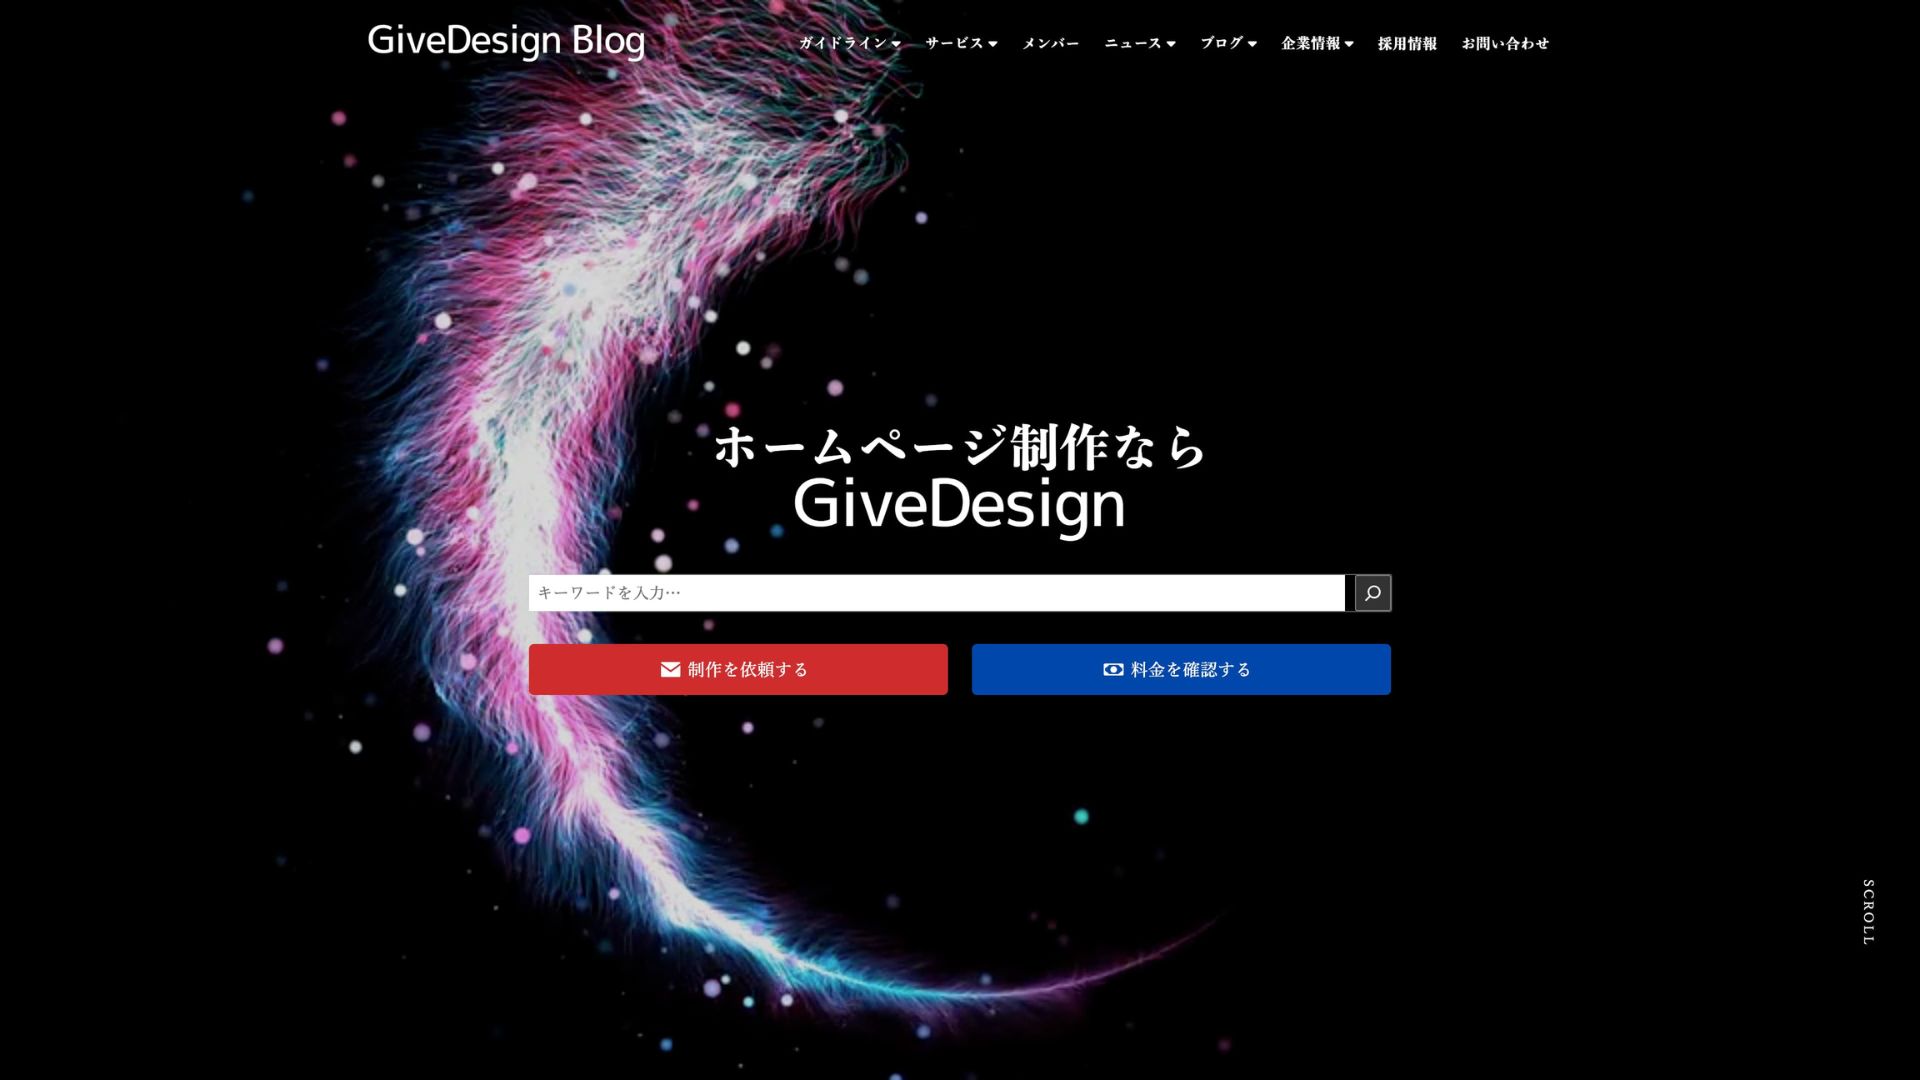 GiveDesign Blog